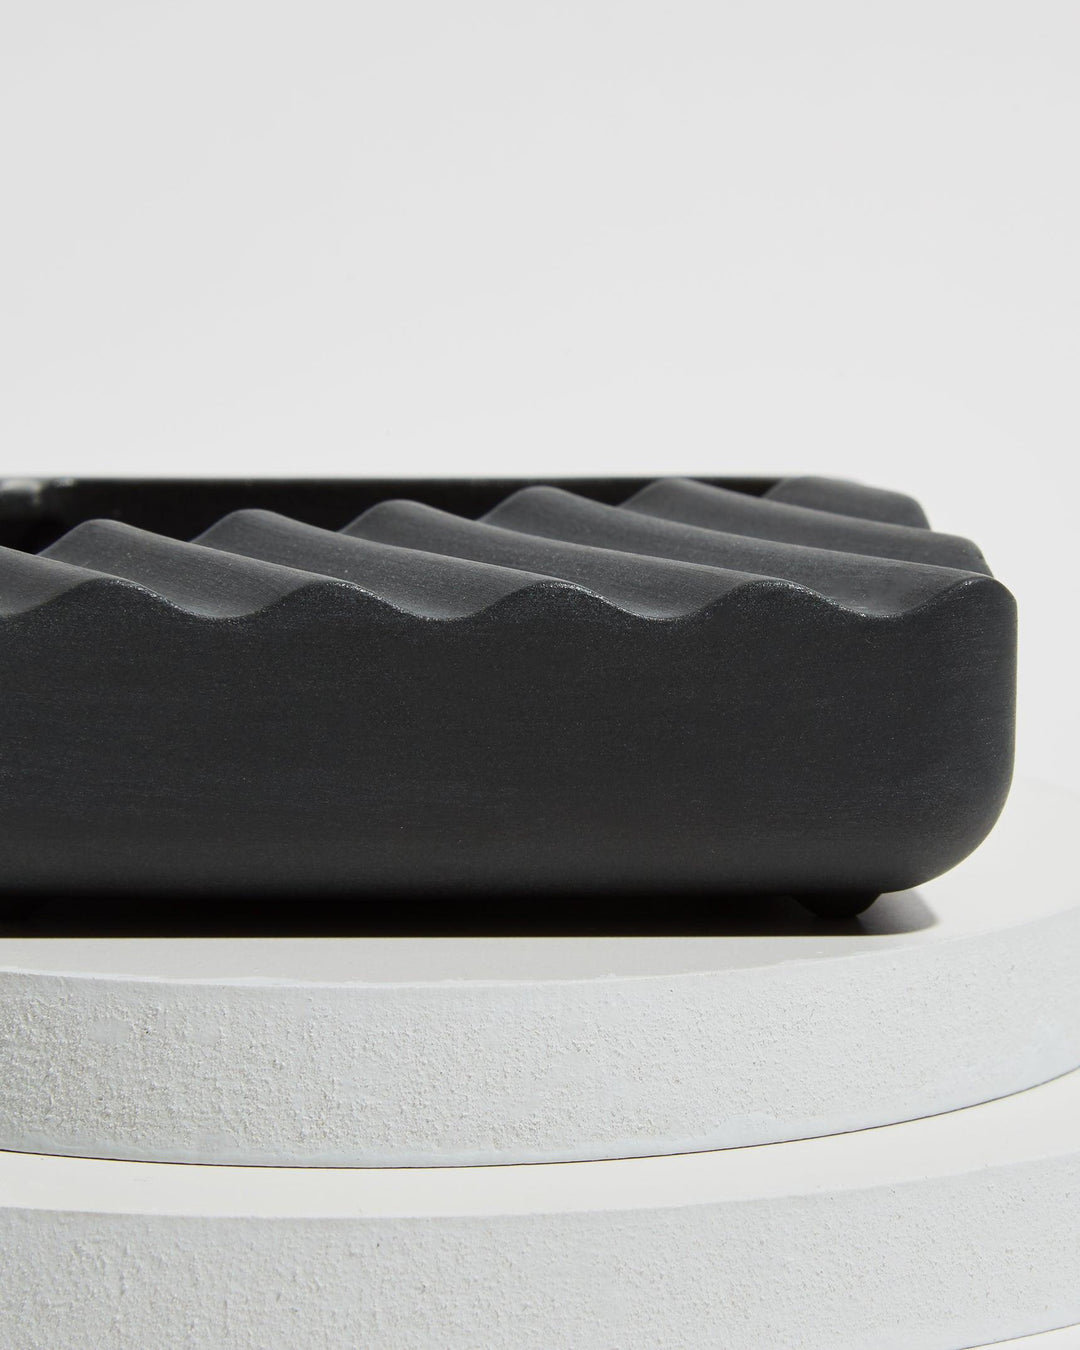 Detail of wavy design of handmade ceramic ashtray in slate black.